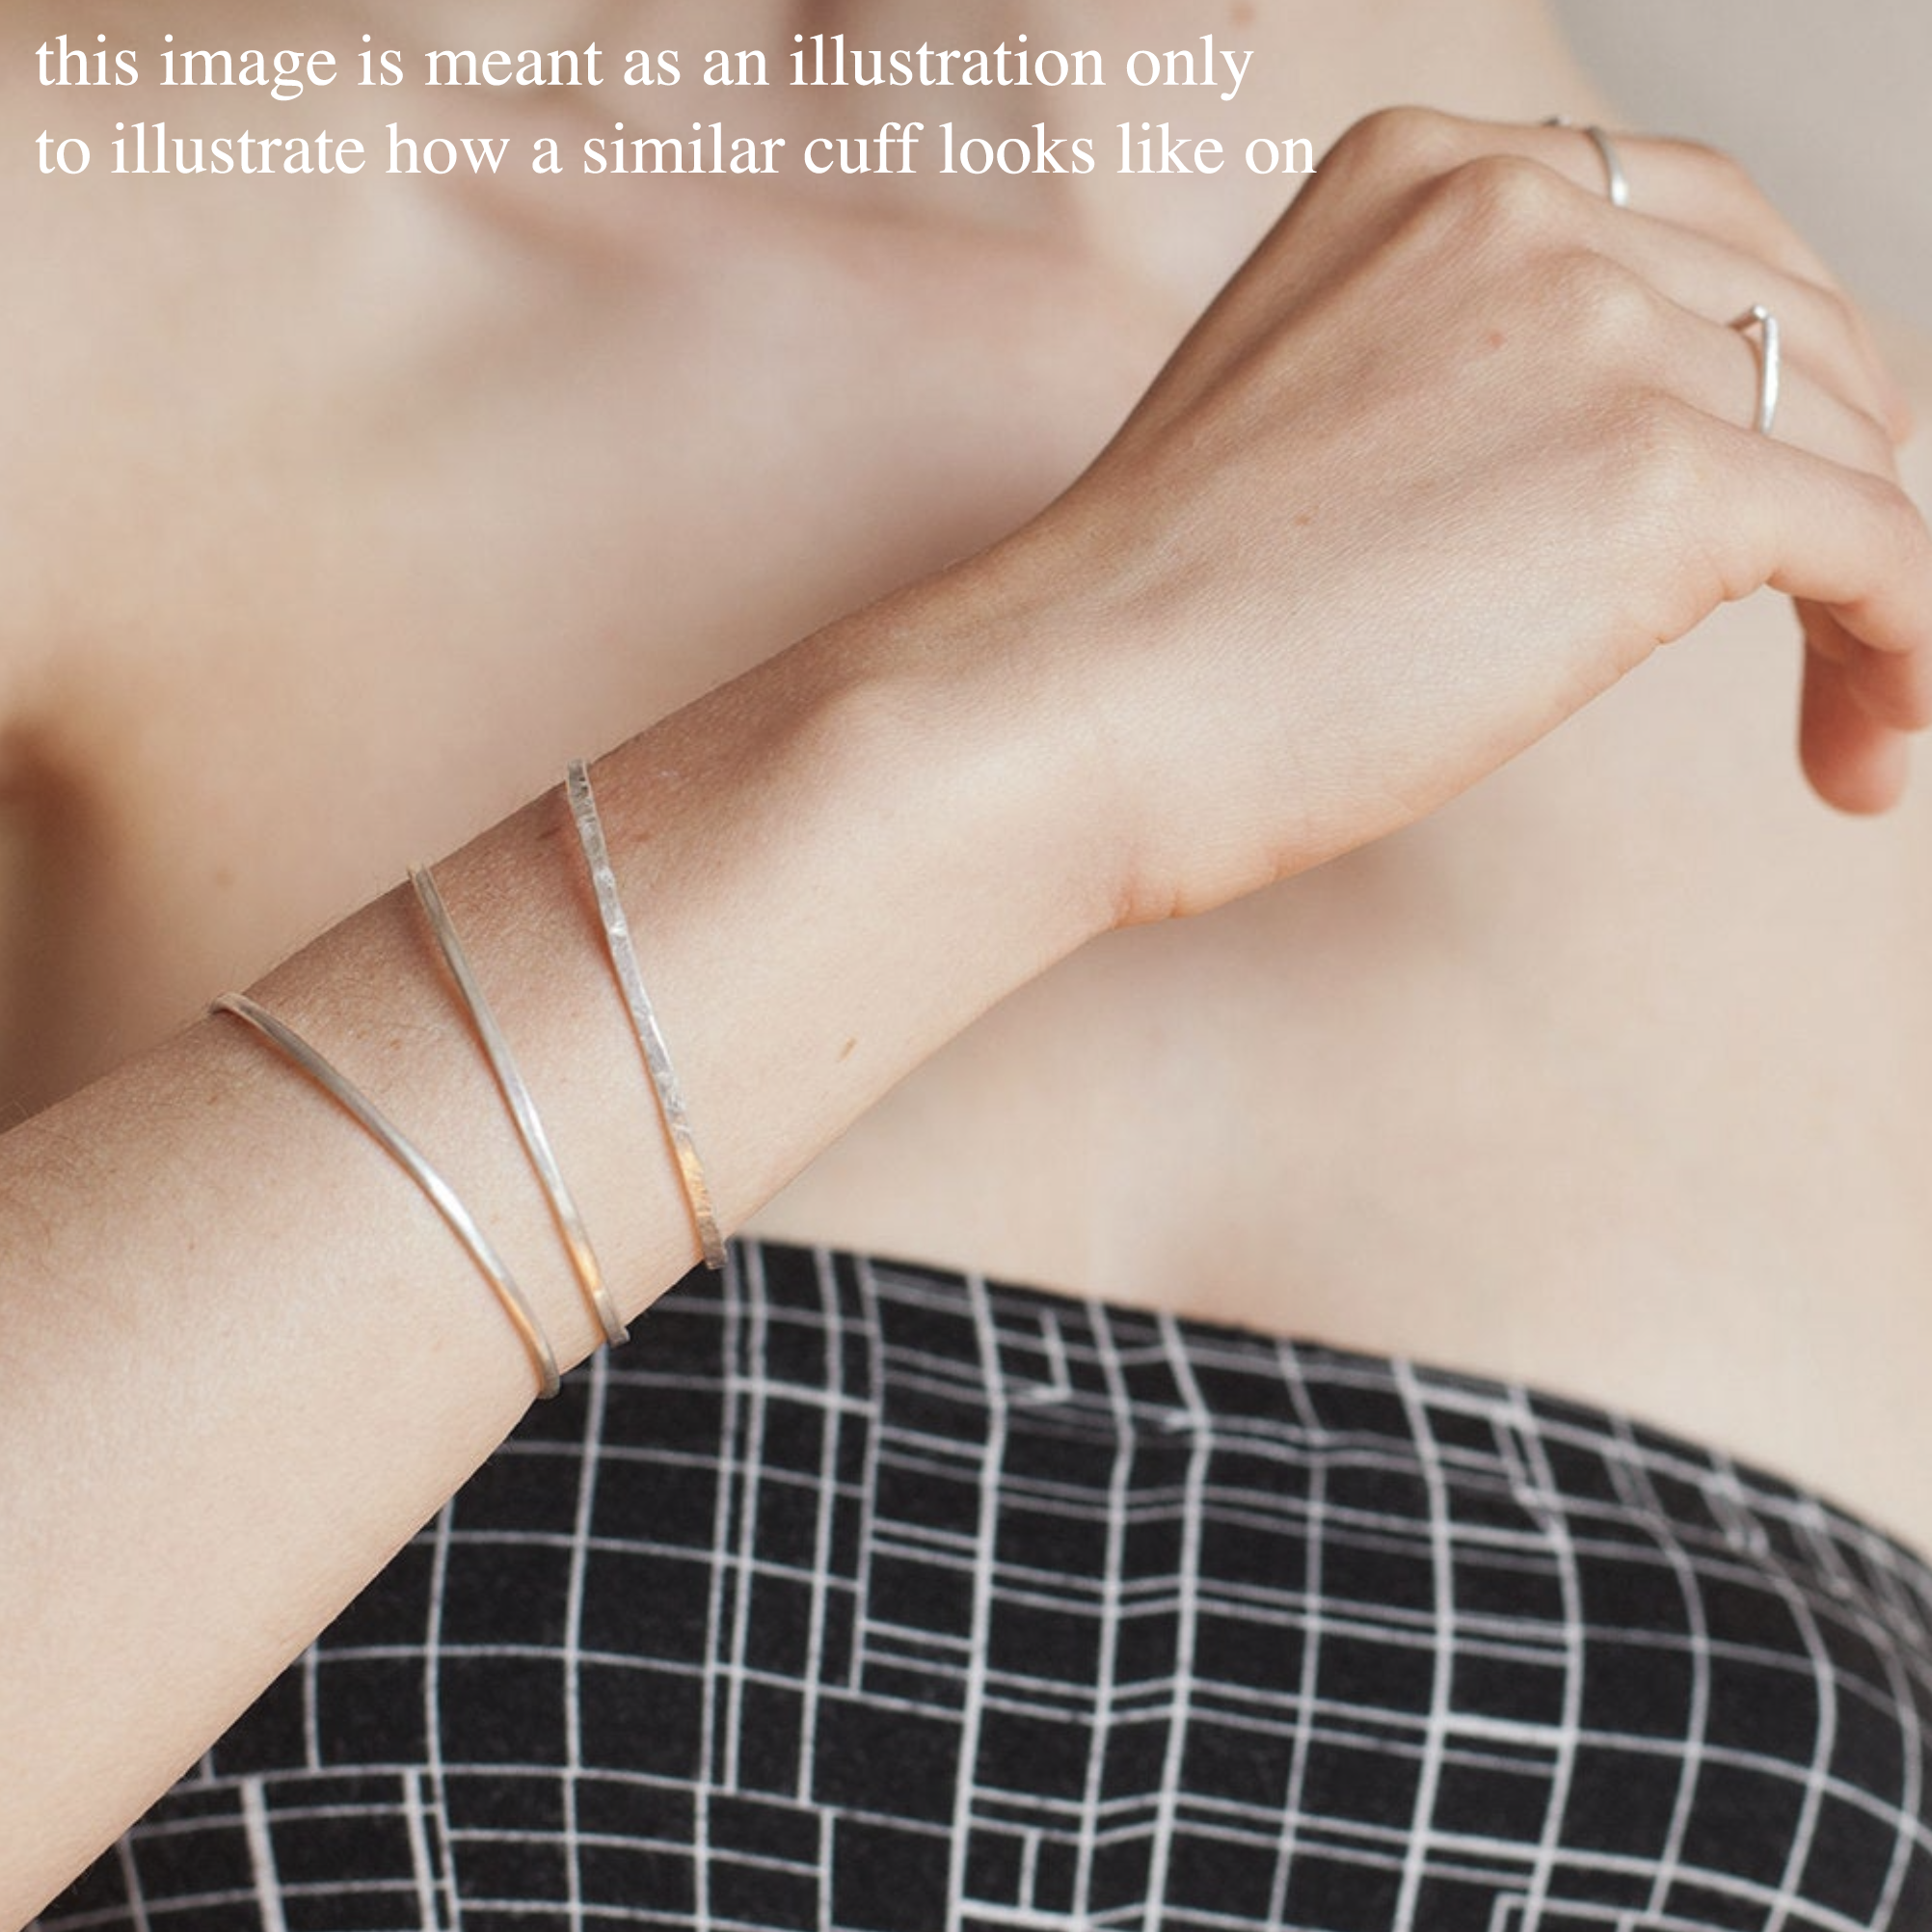 OOAK Simple thin bracelet in silver #2 • size 5cm & 5,5cm (ready-to-ship)